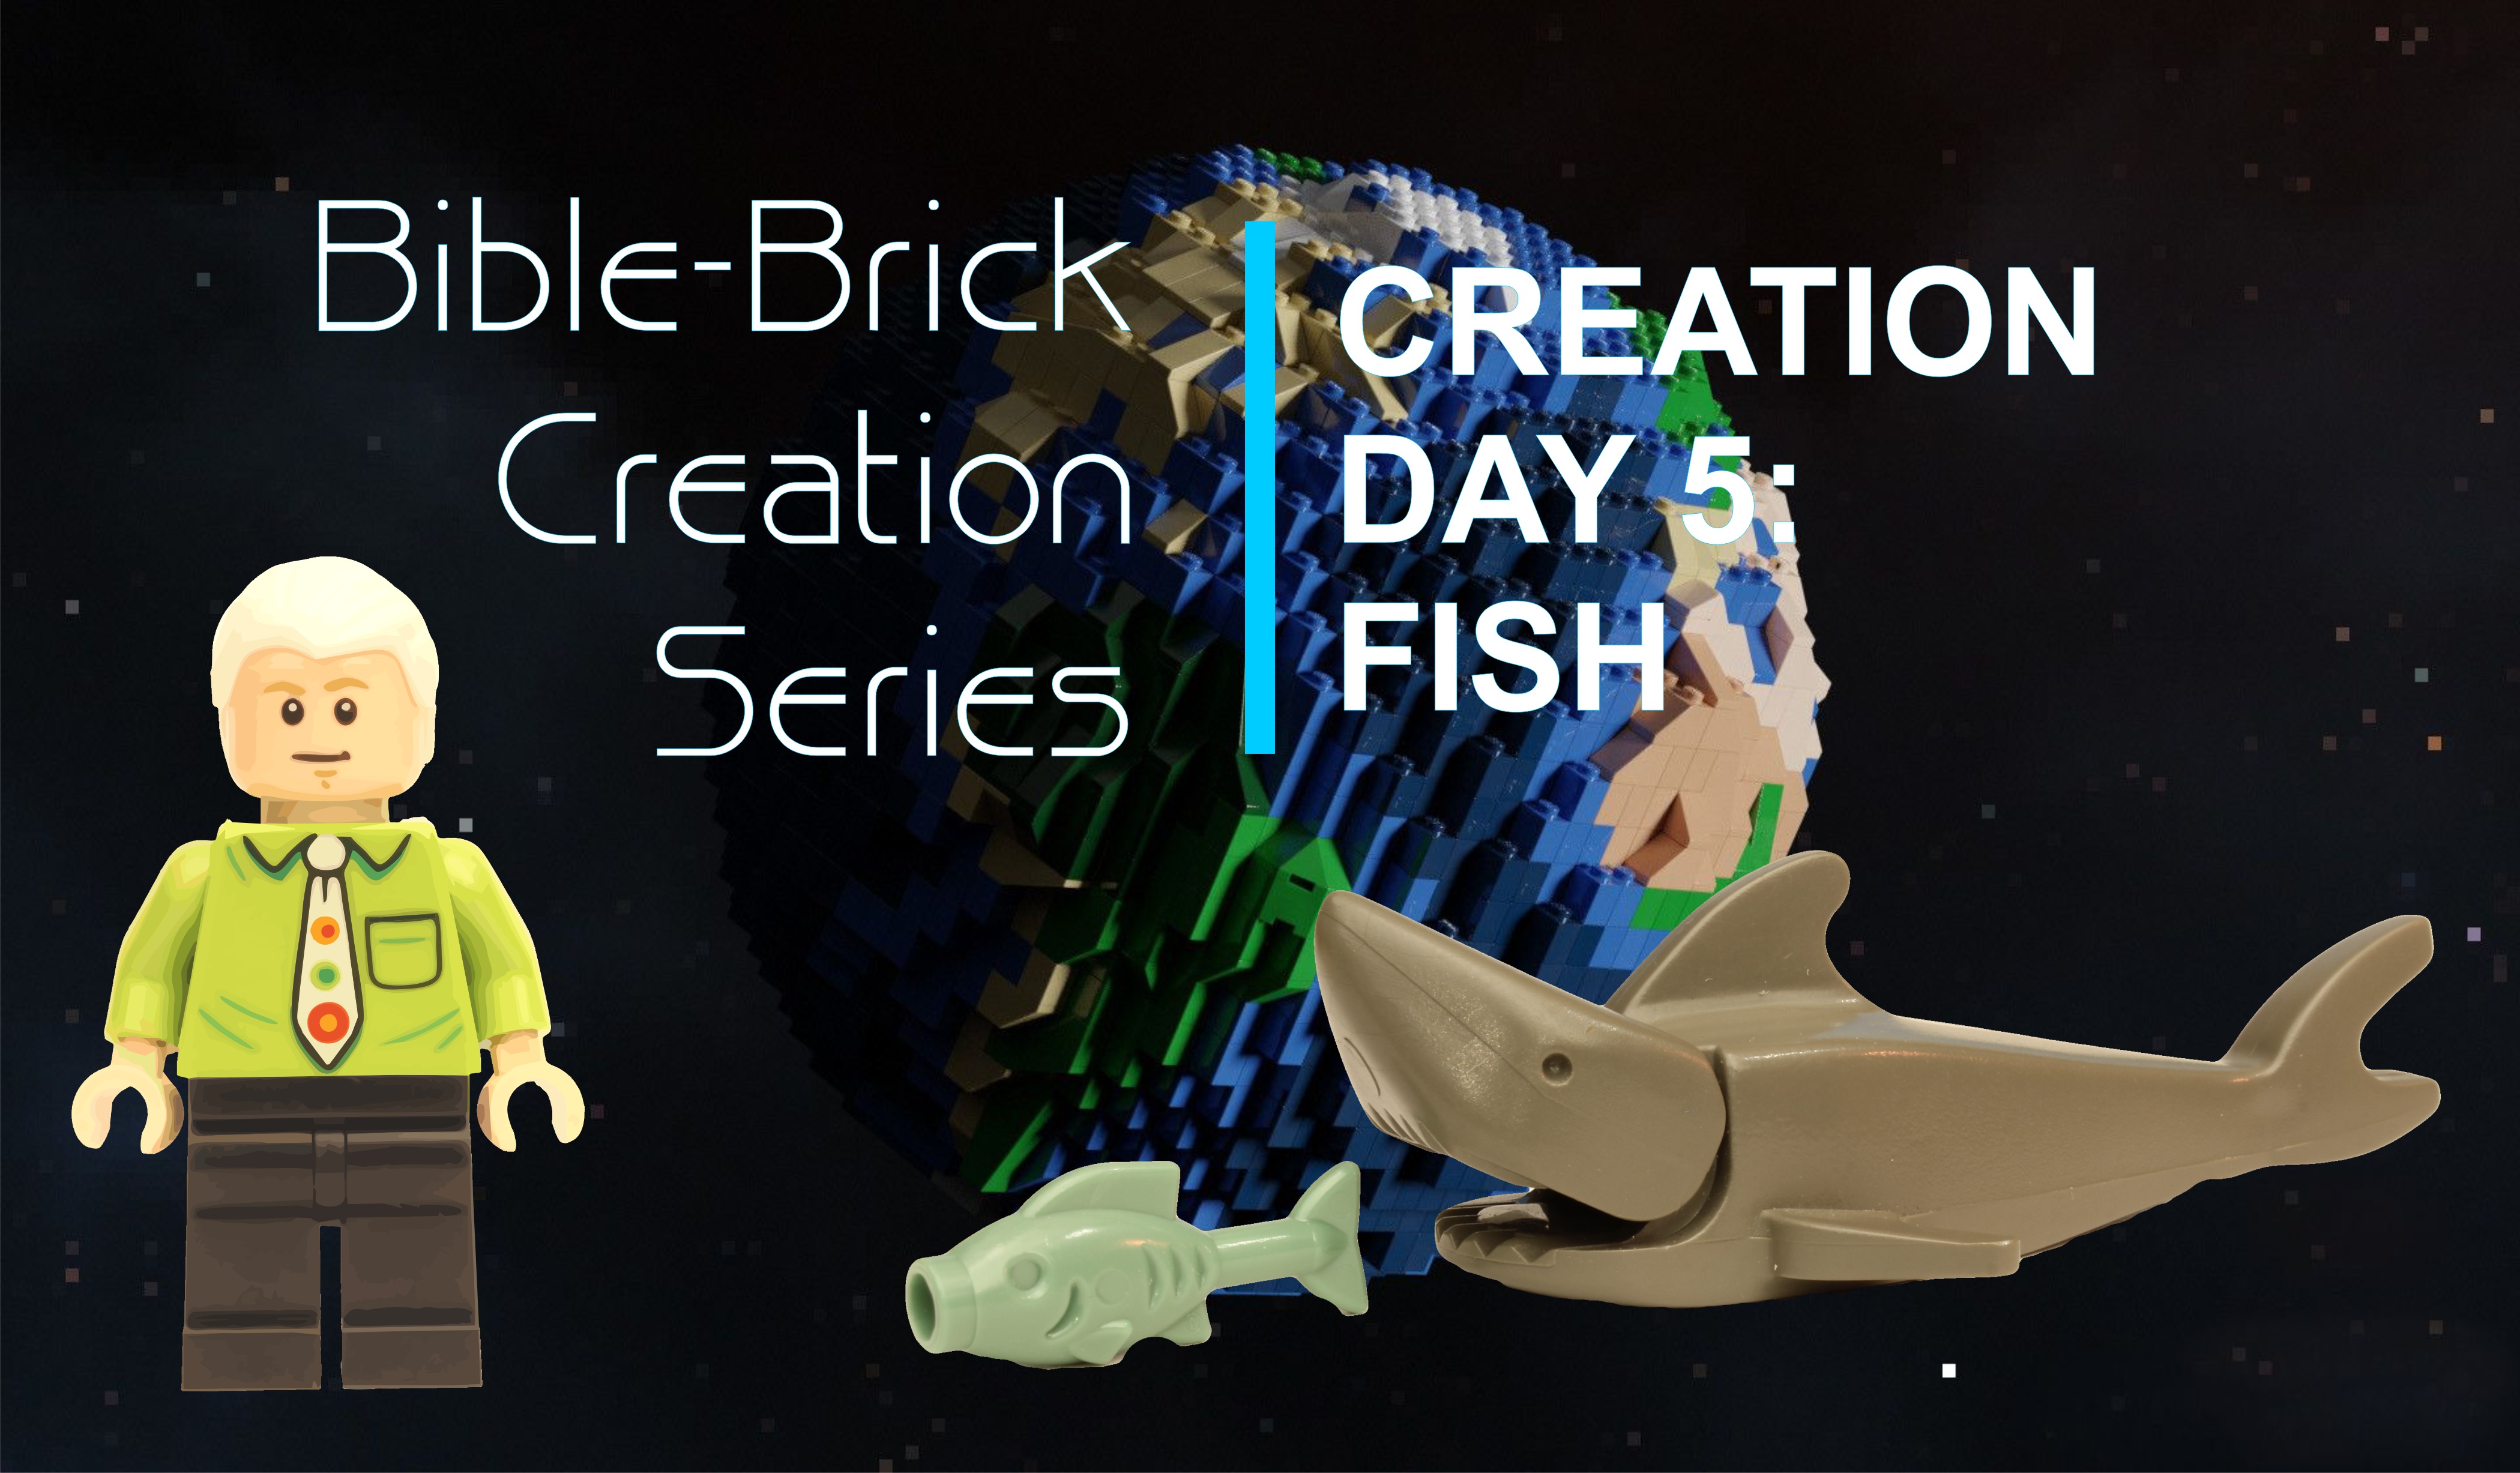 Creation #19 Day 5 Fish